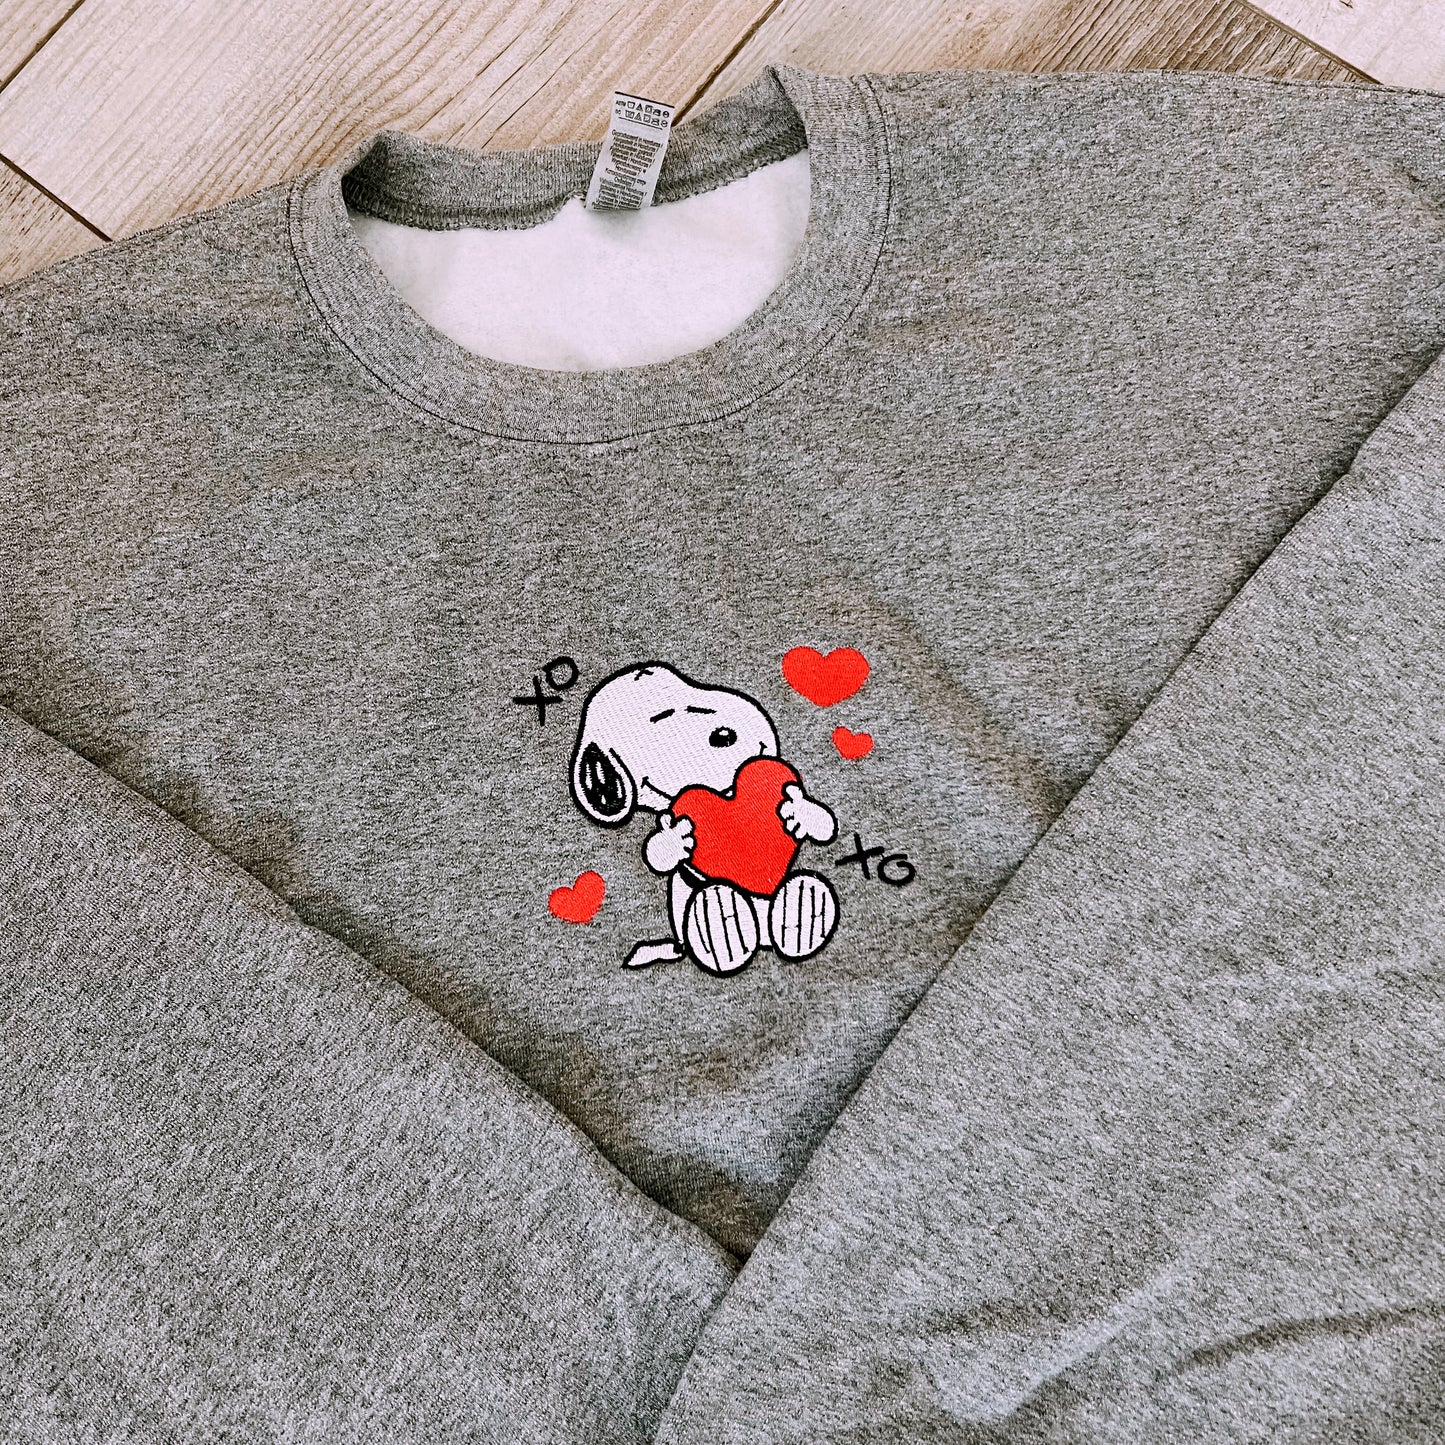 Snoopy Love